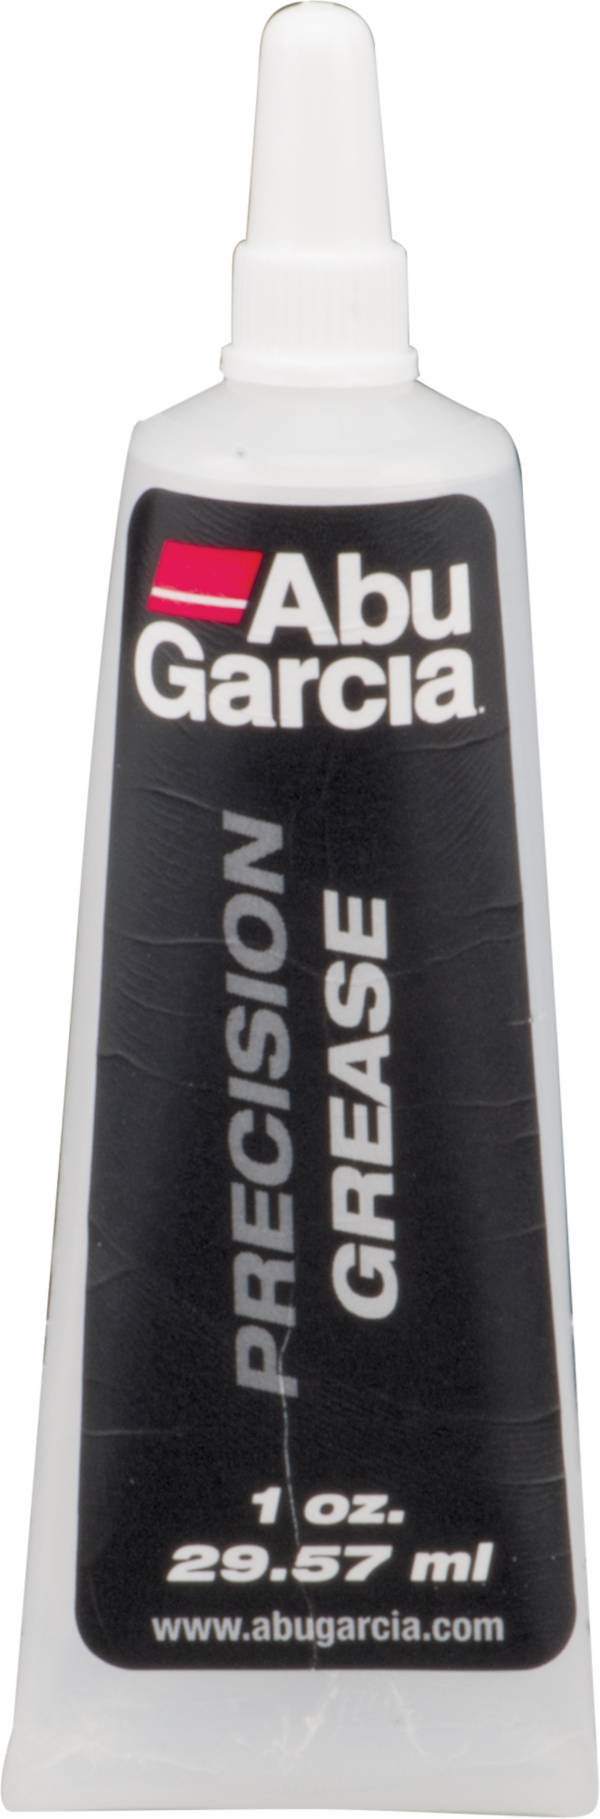 Abu Garcia Reel Grease product image